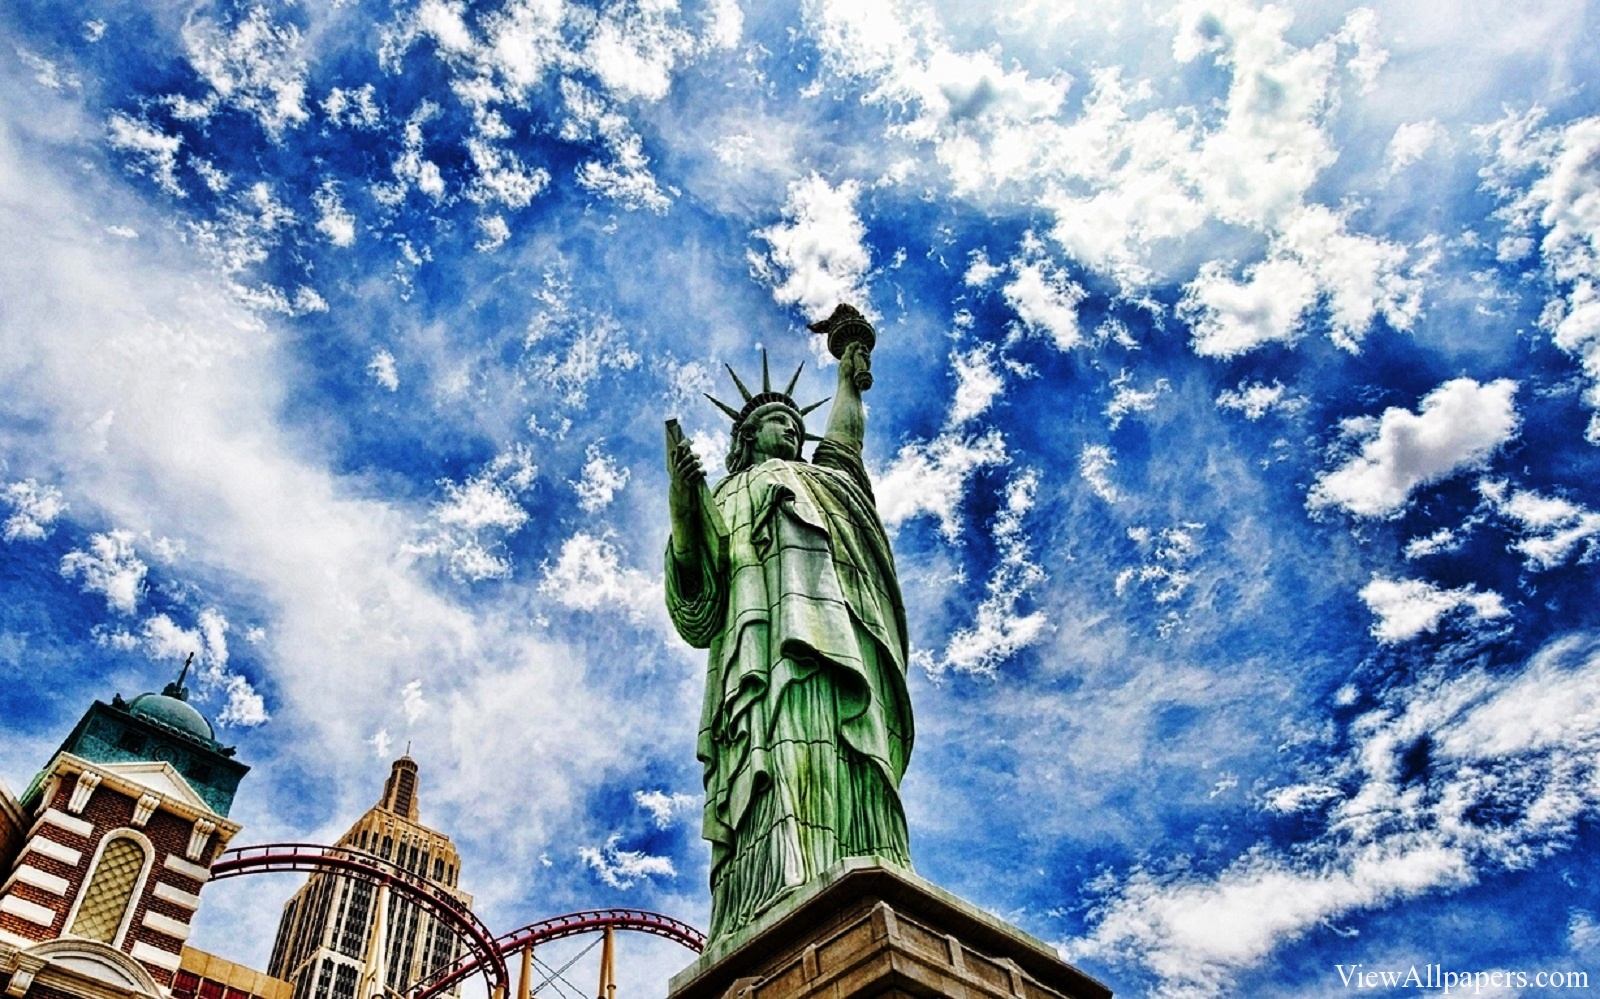 Statue Of Liberty Wallpaper Wallpapersafari Afalchi Free images wallpape [afalchi.blogspot.com]